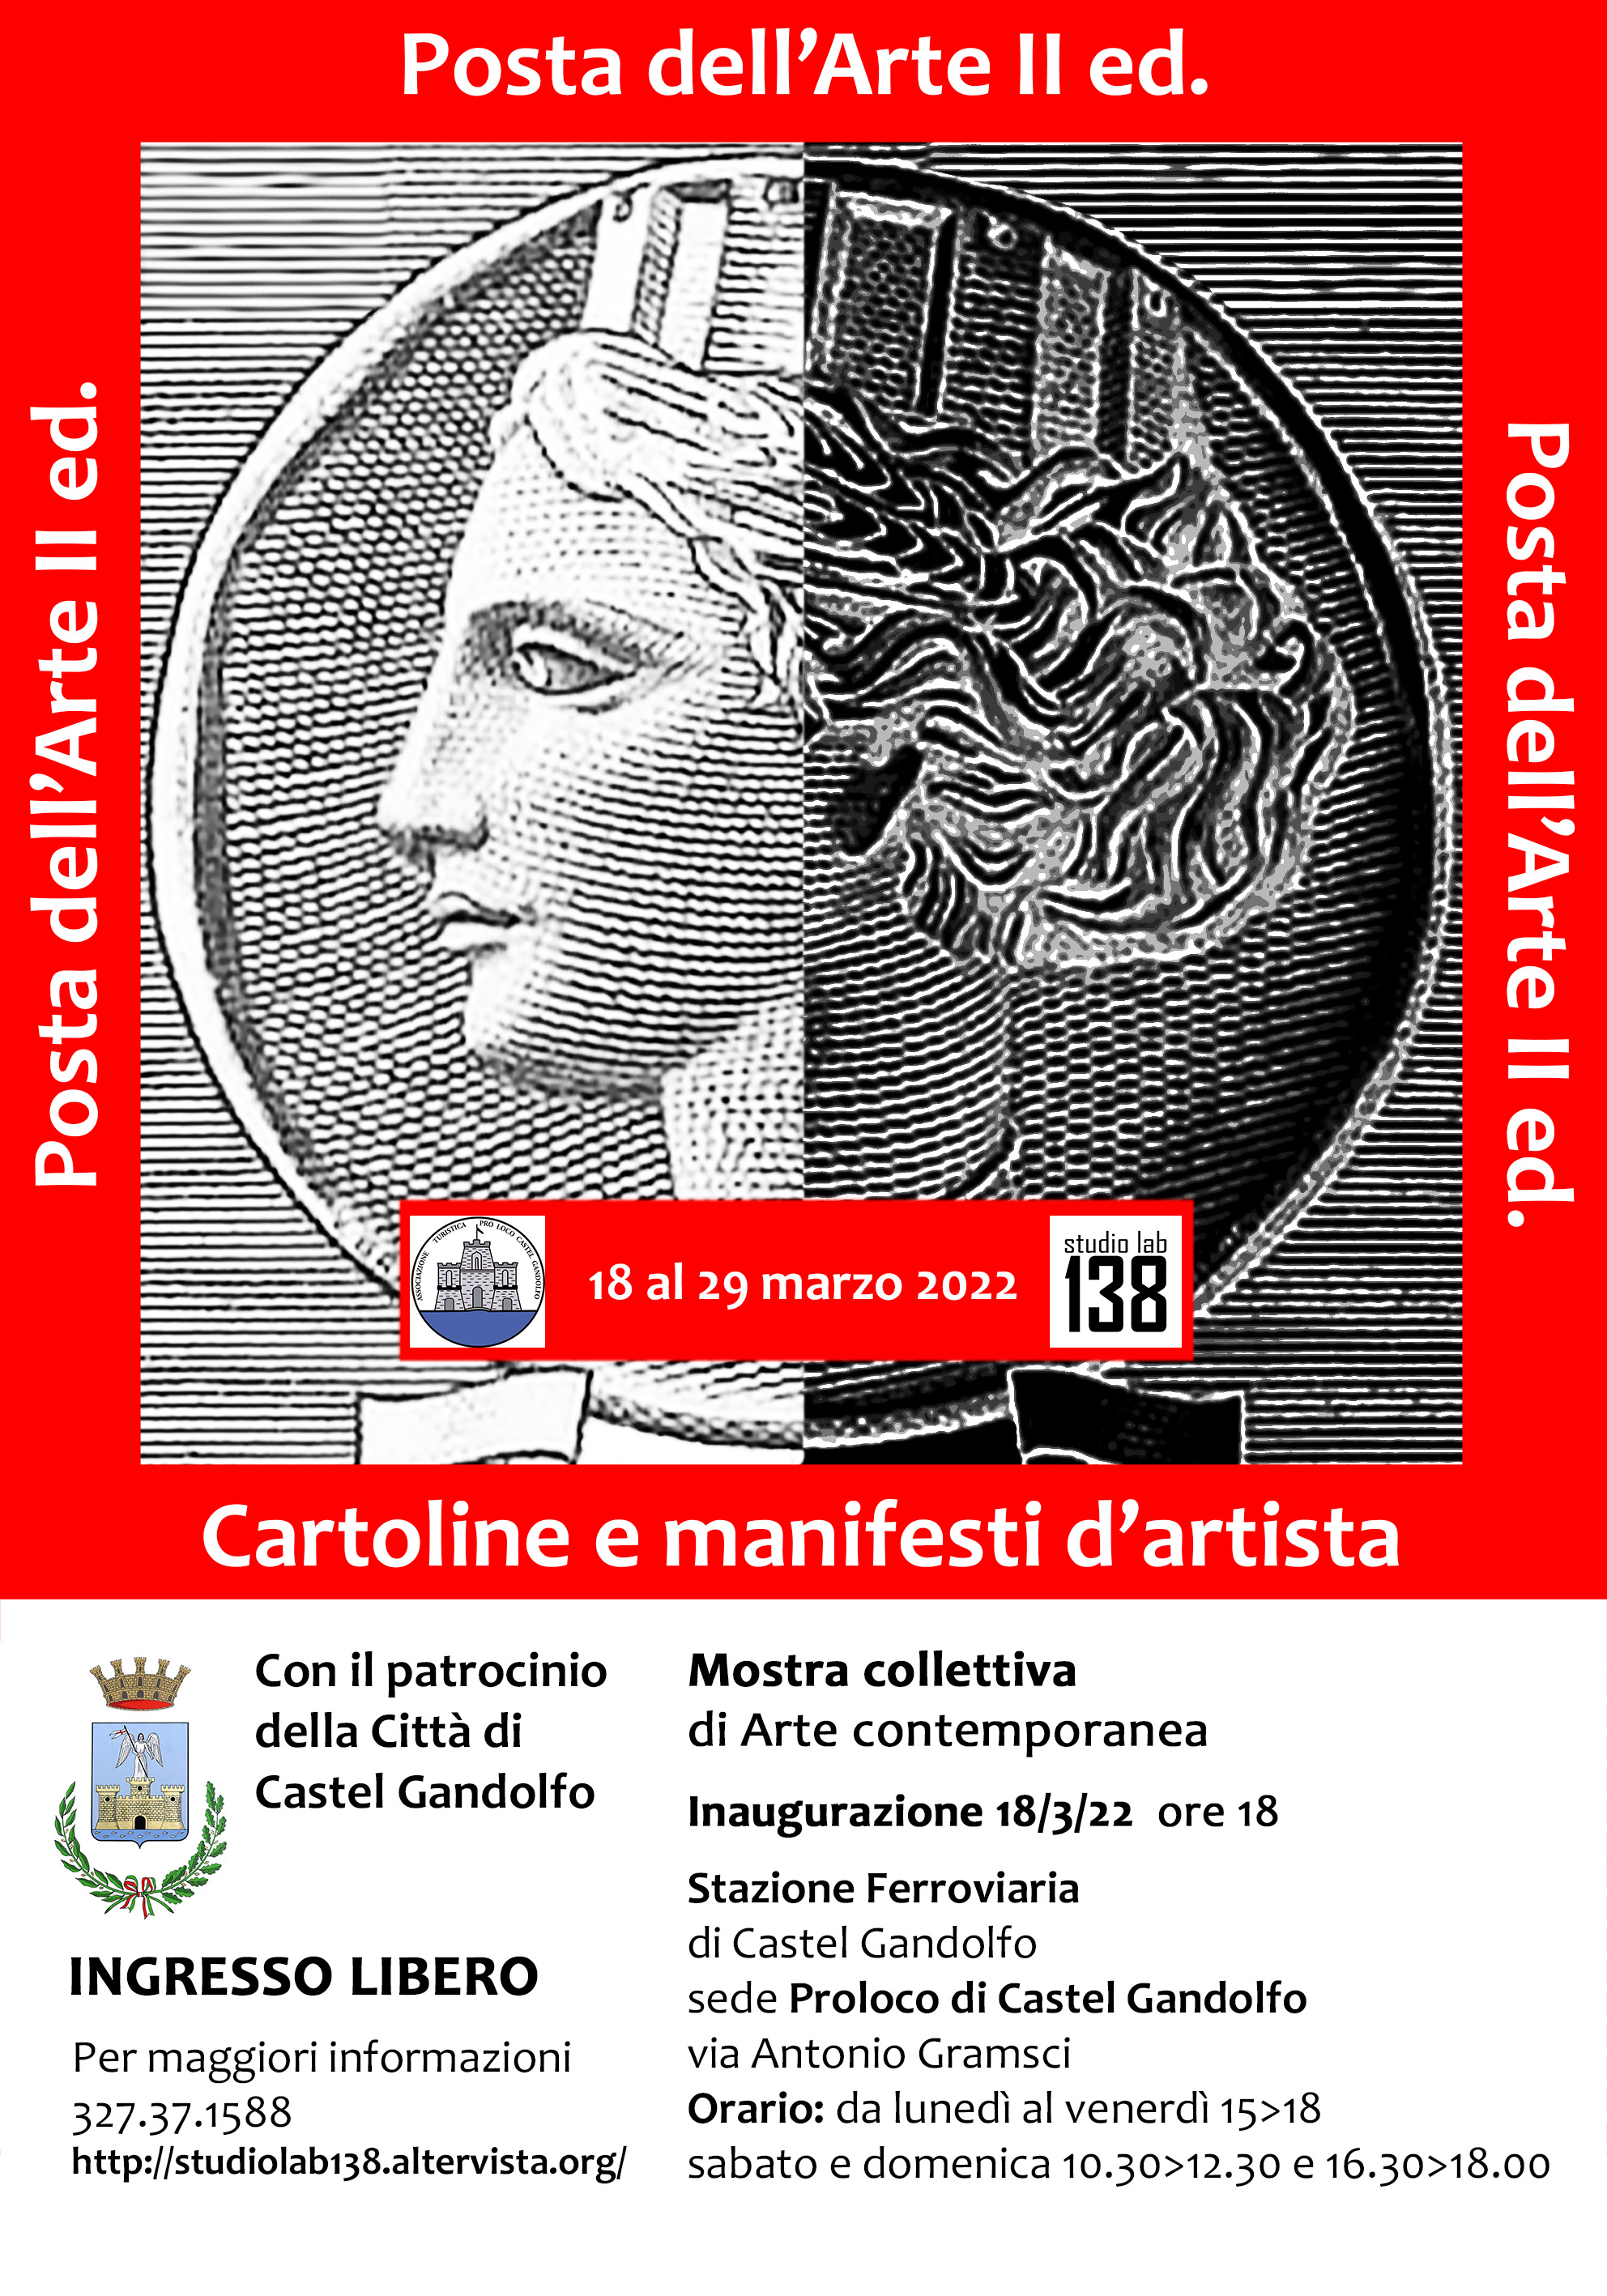 Posta dell'Arte II ed. PROLOCO Castel Gandolfo